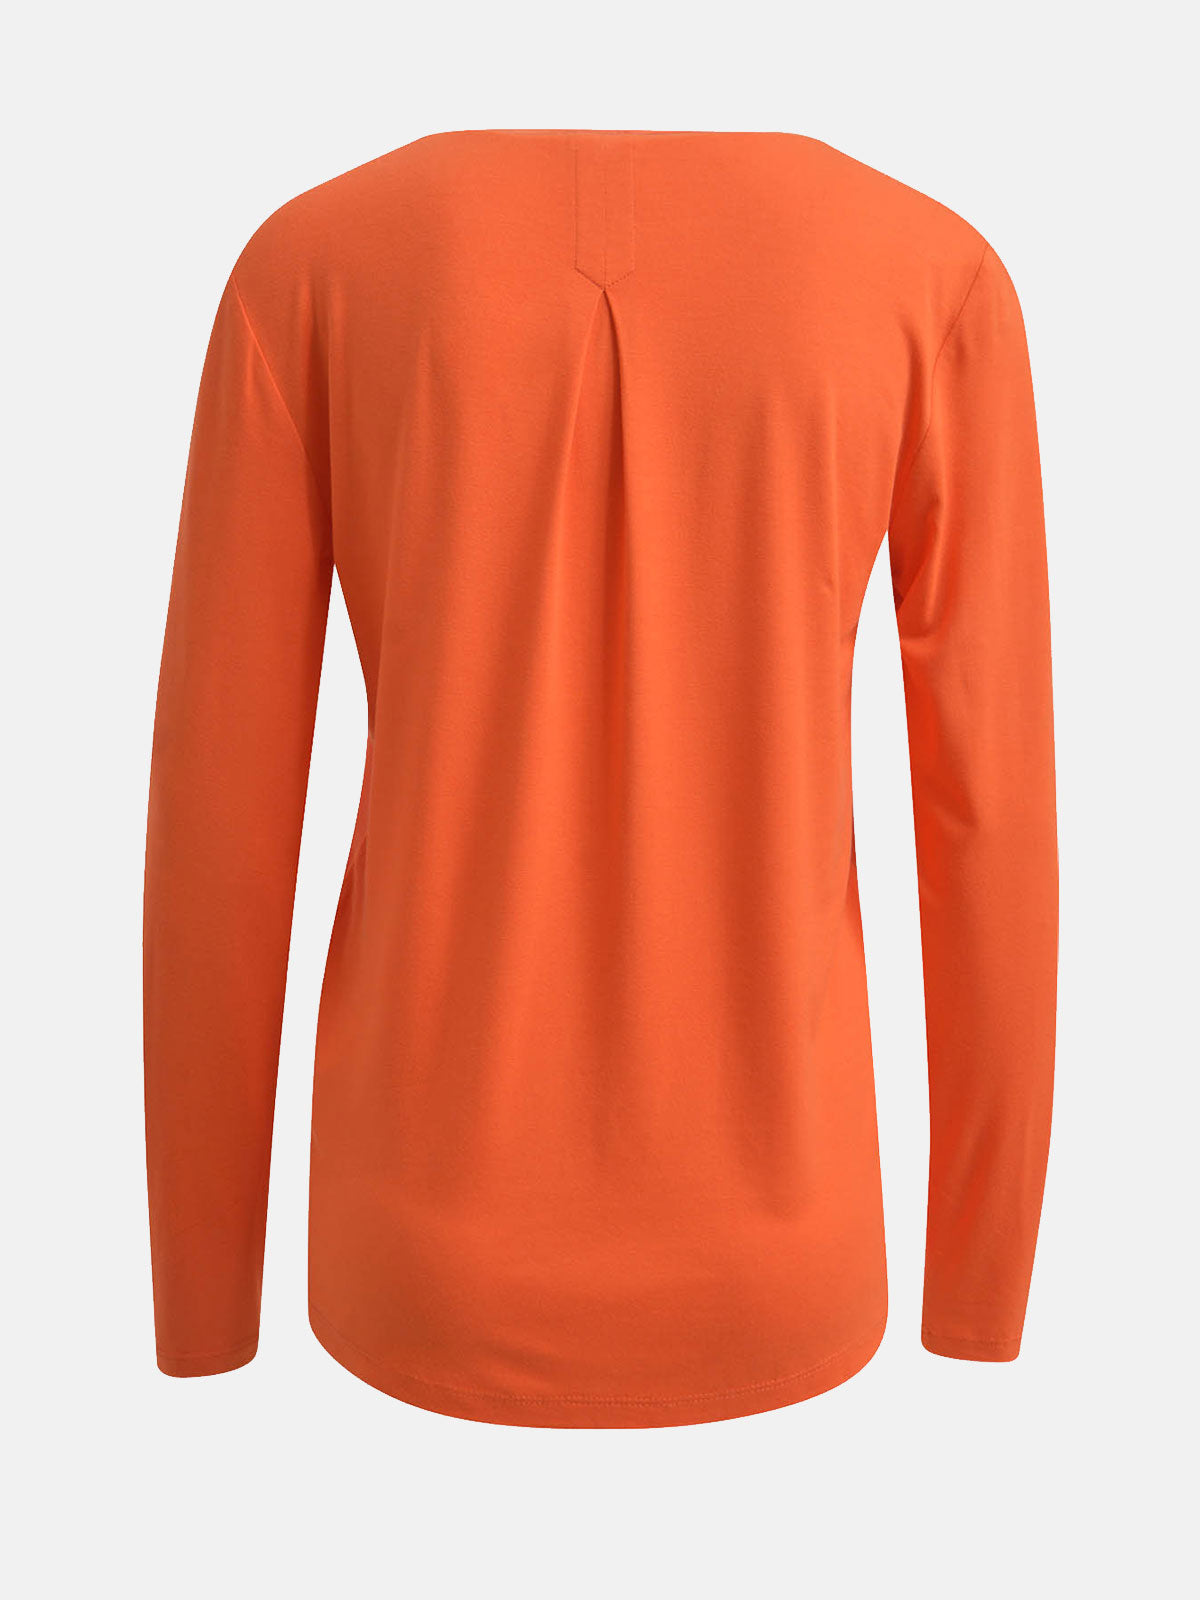 Hot Orange V-Neck Top with Breast Pockets